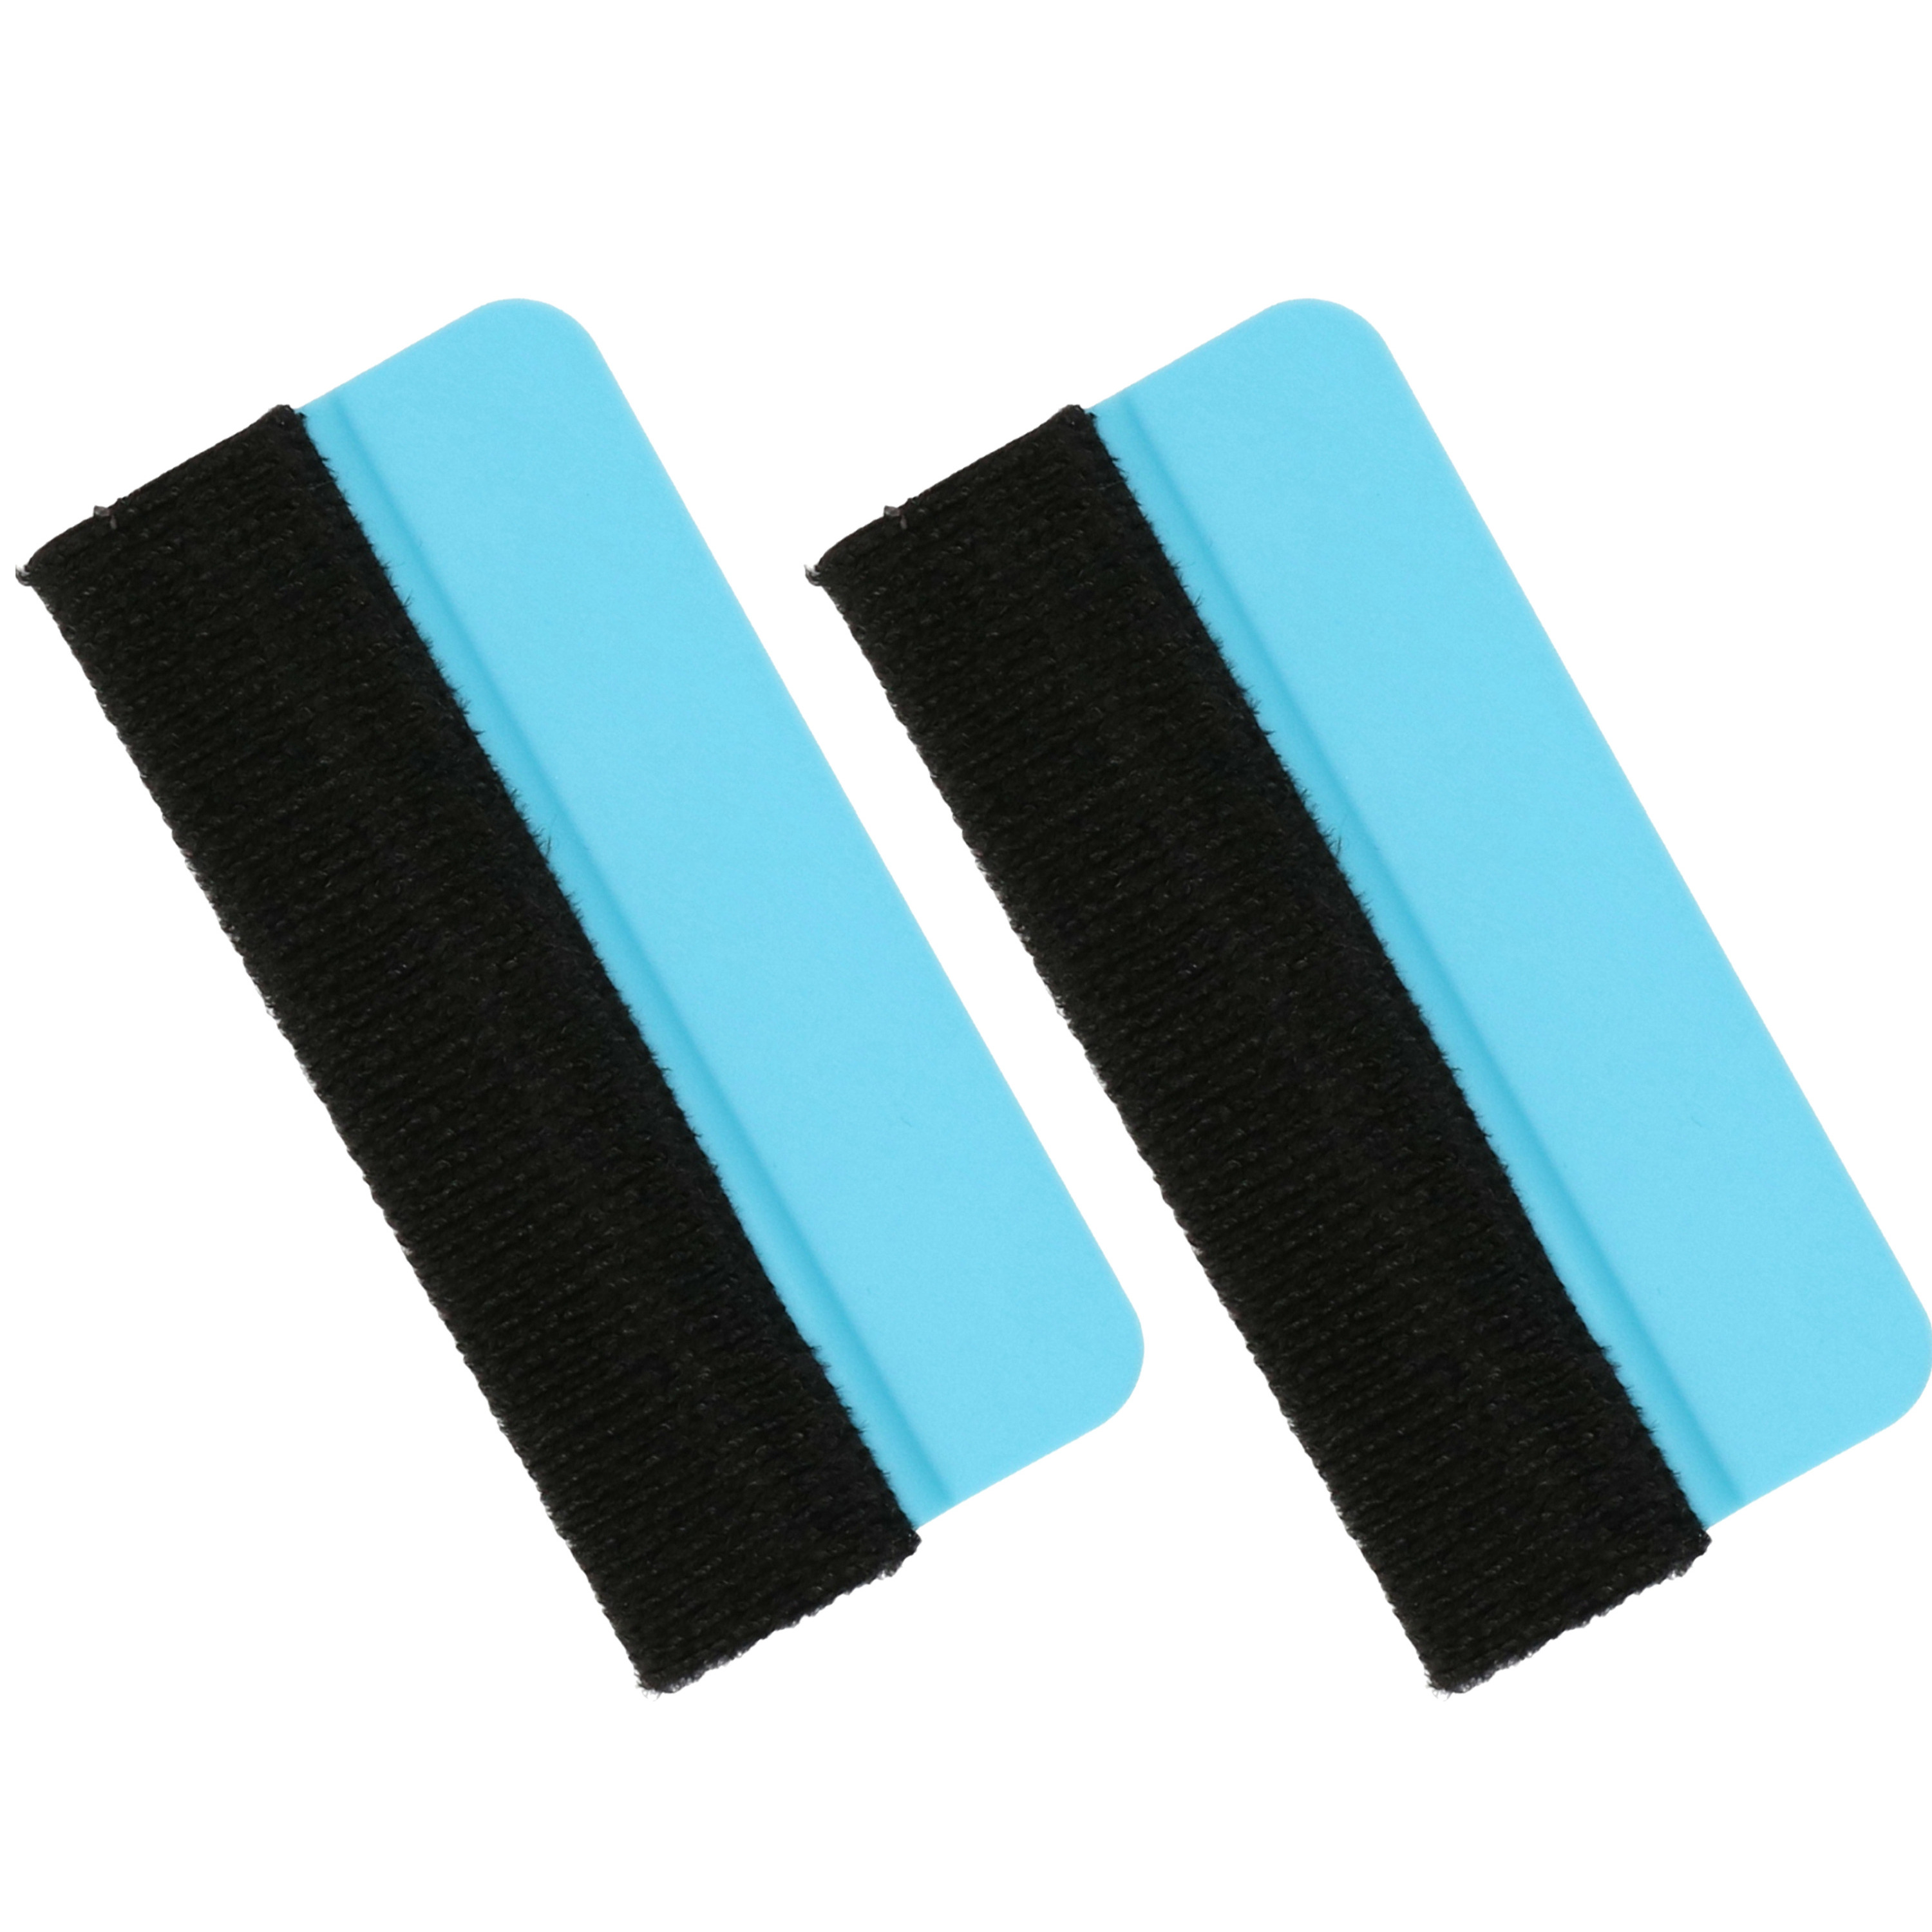 Multipak van 2x stuks aandruk spatels-rakels blauw kunststof voor raamfolie en plakplastic ca. 10 cm